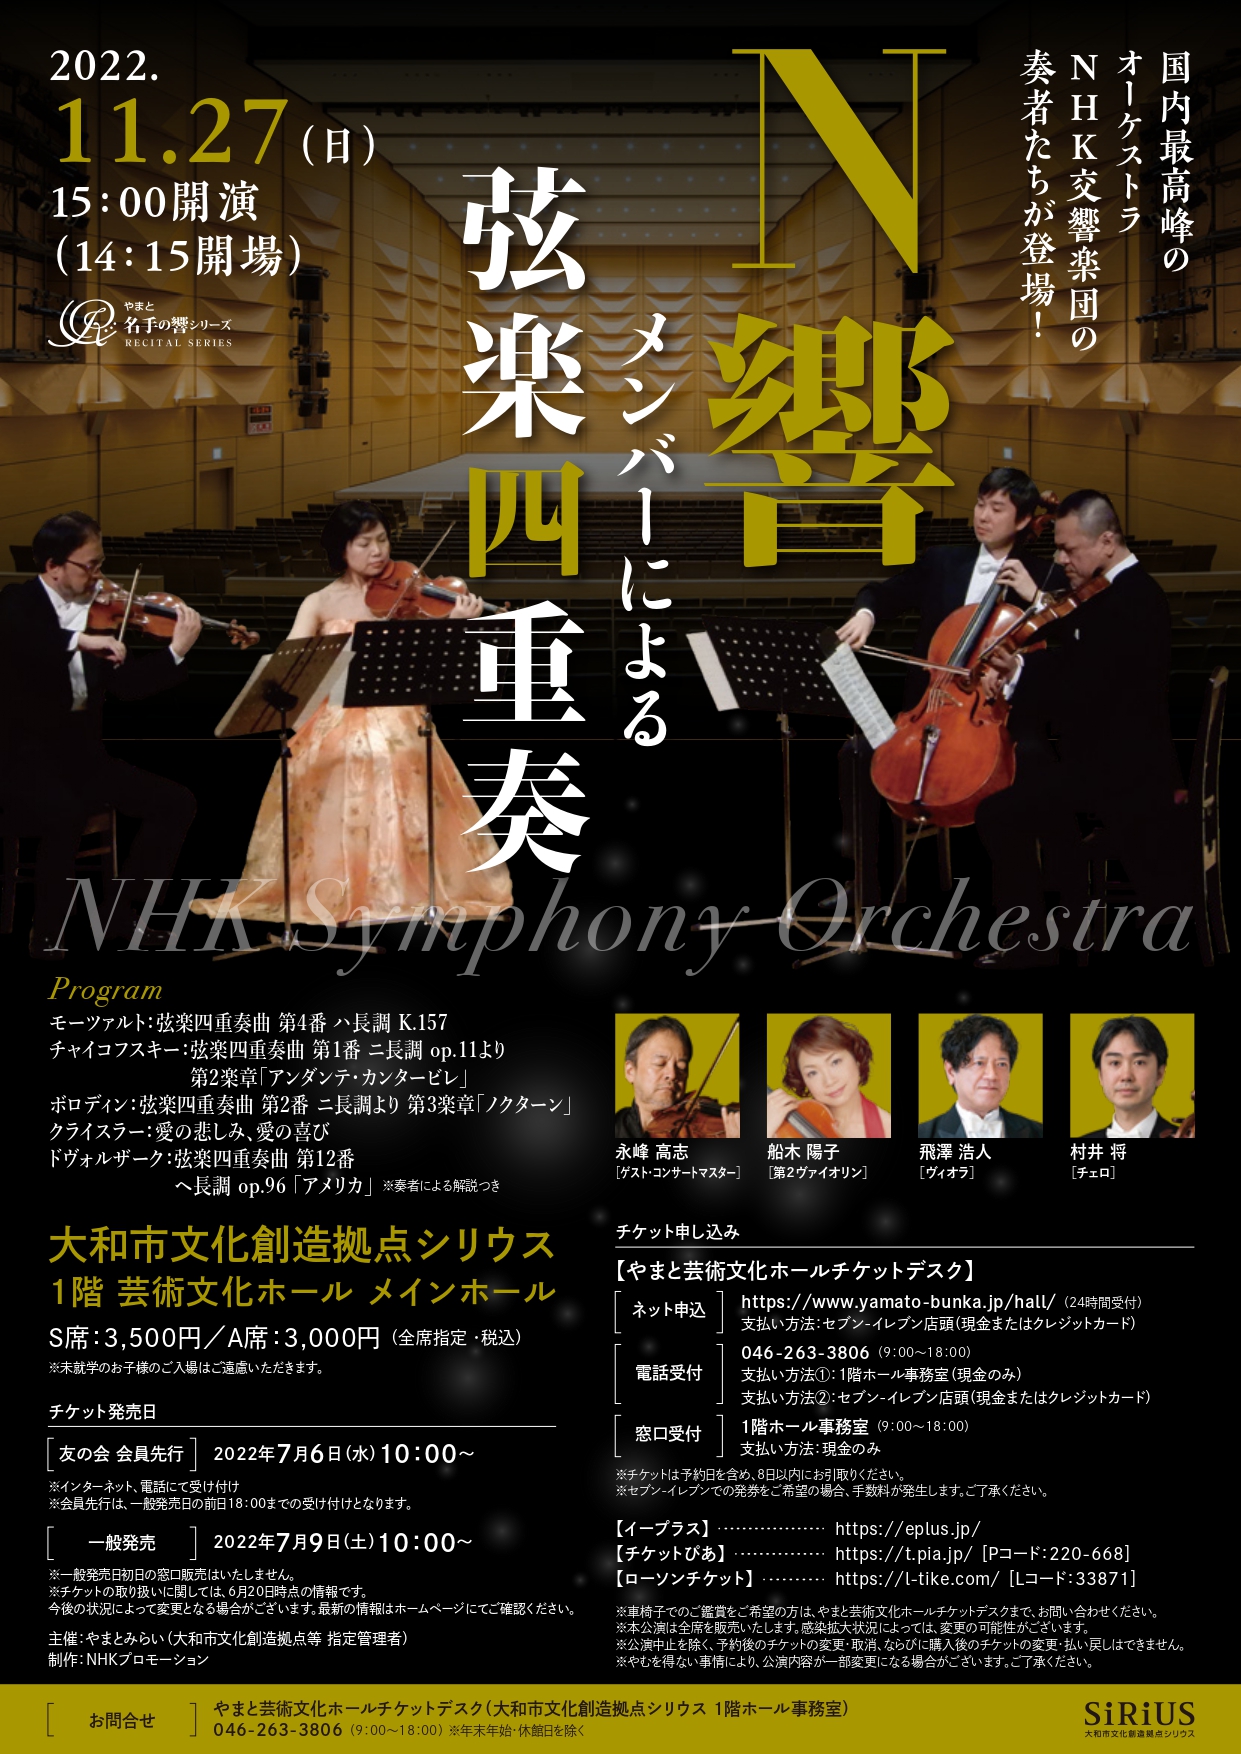 NHK交響楽団 日本トップレベルの奏者が集結 『N響メンバーによる弦楽四重奏』開催決定 カンフェティでチケット発売 | NEWSCAST